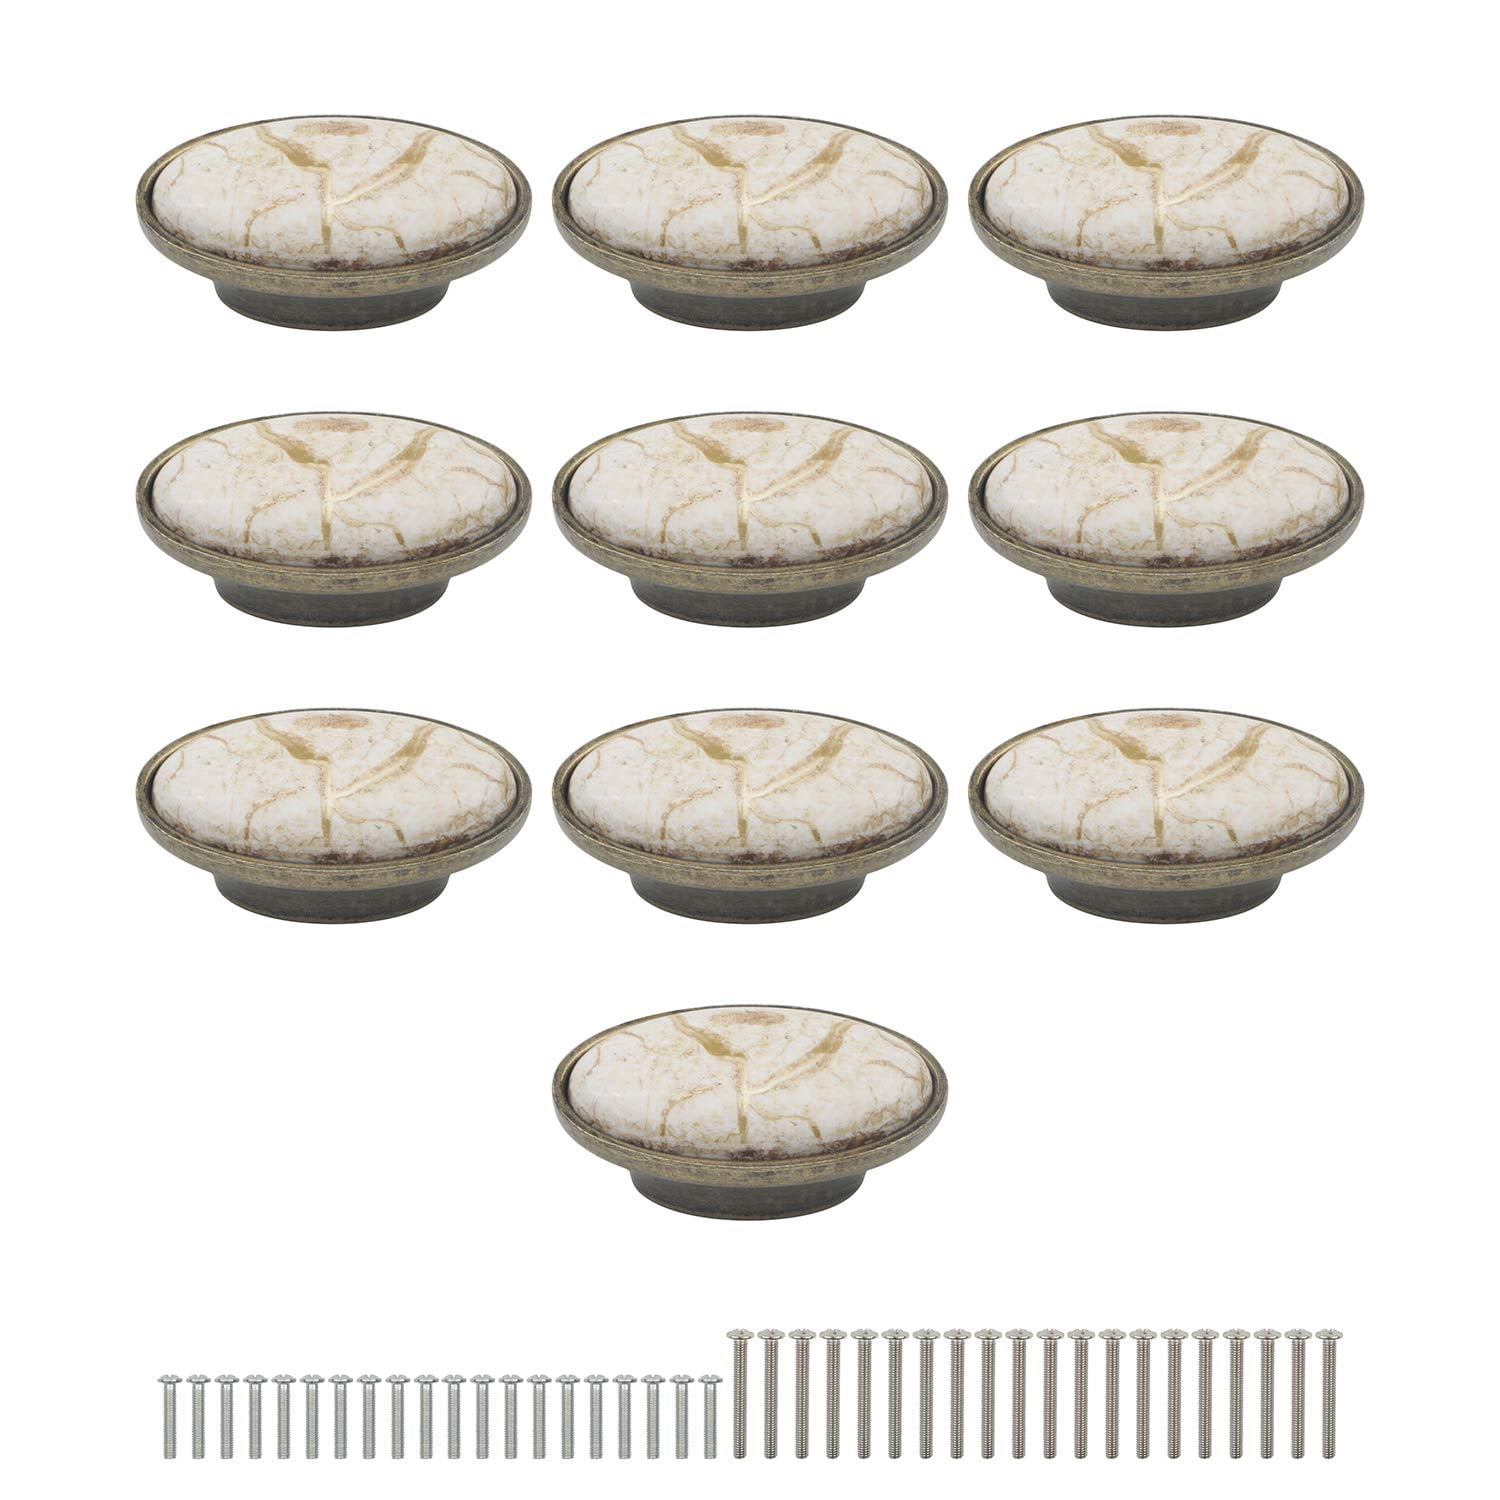 Set of 10 Marbling Ceramic Handle Antique Cabinet Door Ellipse Handle knob European Style Furniture Handle 16mm Hole Centers